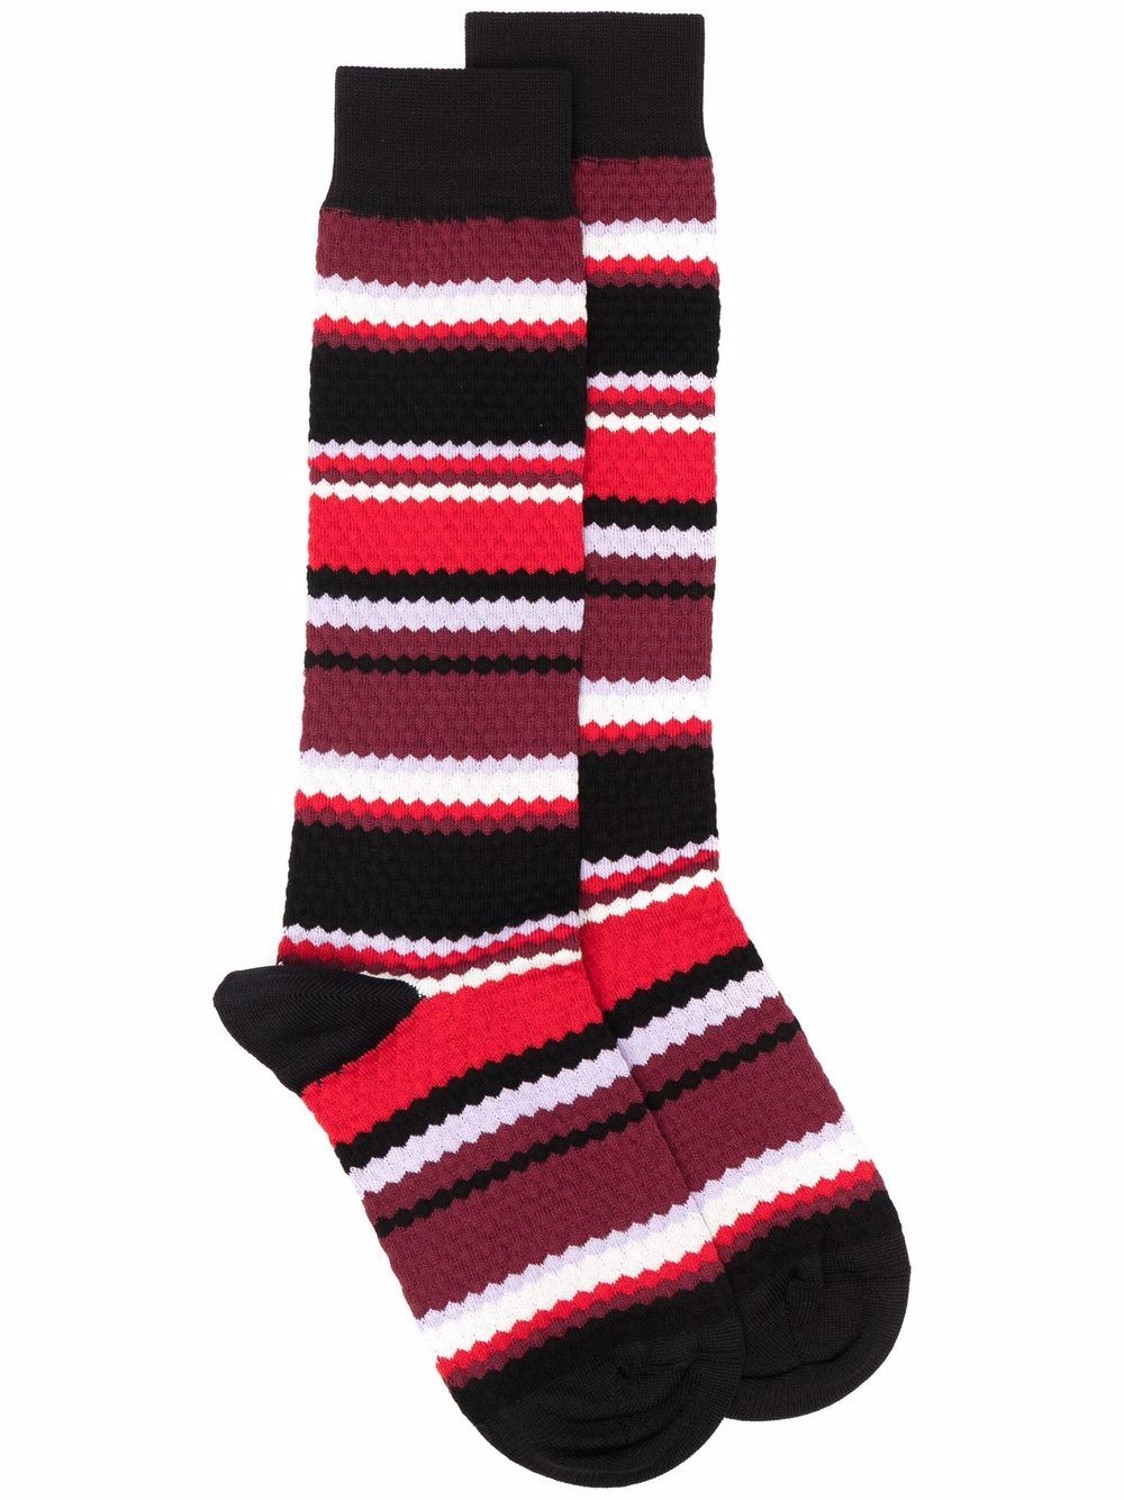 shop Marni  Accessories: Accessories Marni, socks, multicolor strips, midi length.

Composition: 100% cotton.
10= 36-38
12= 39-41 number 2288